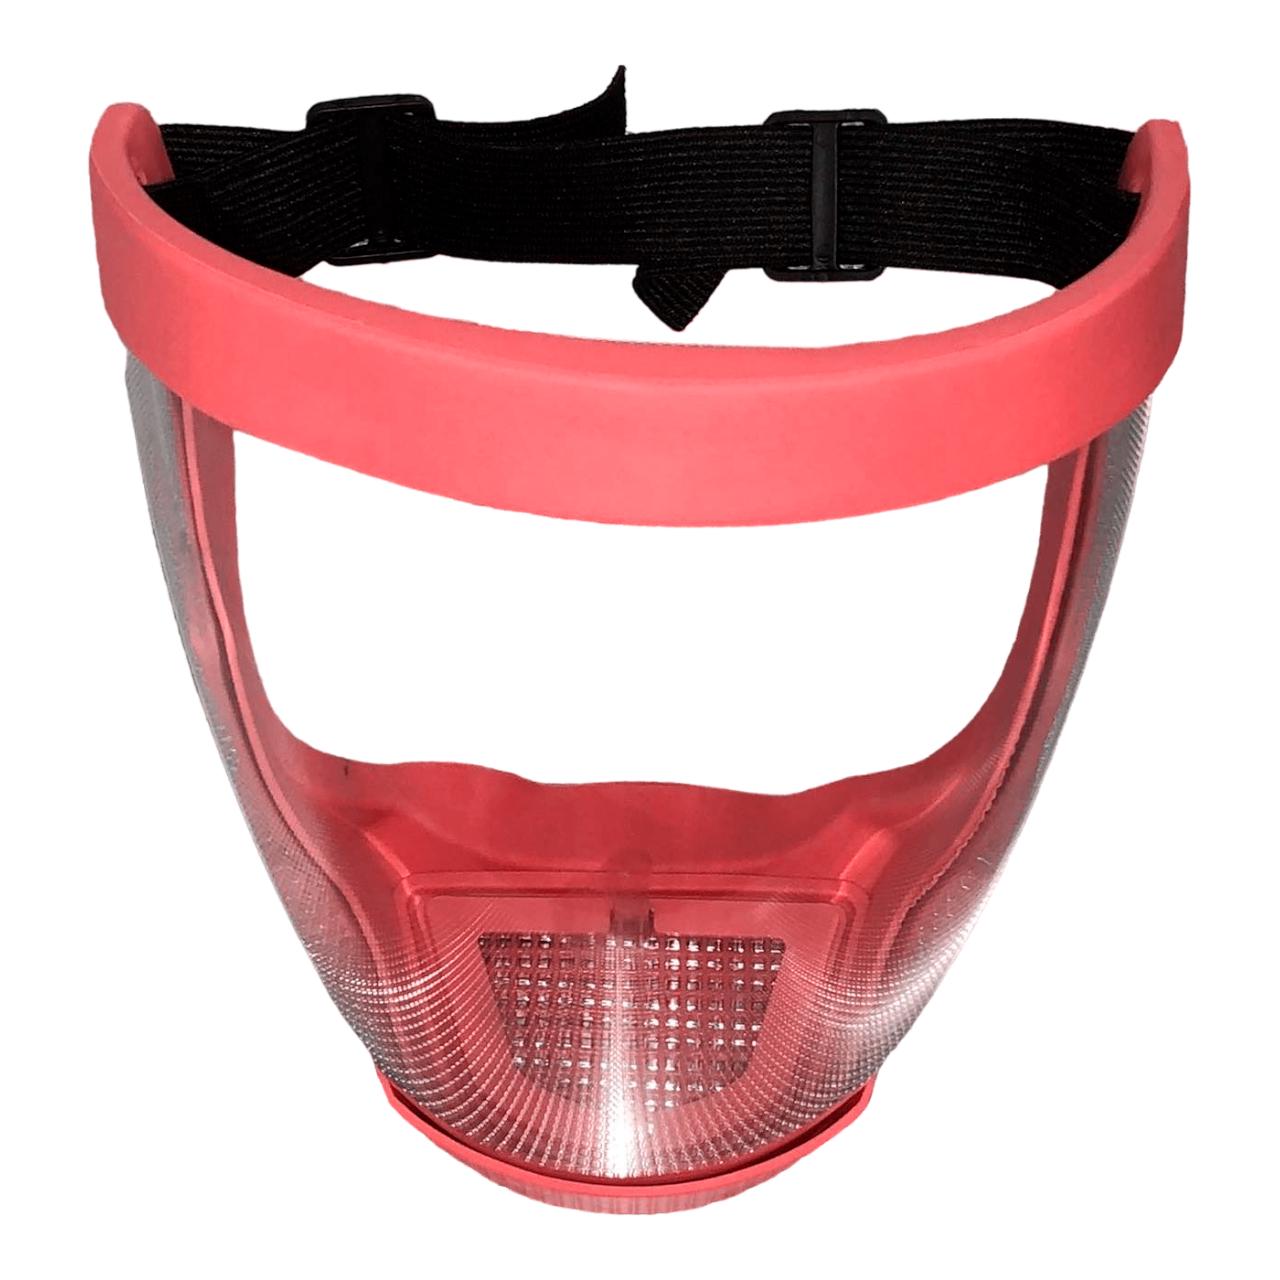 ᐉ  маска 3М на все лицо со сменными фильтрами Red (11312399)